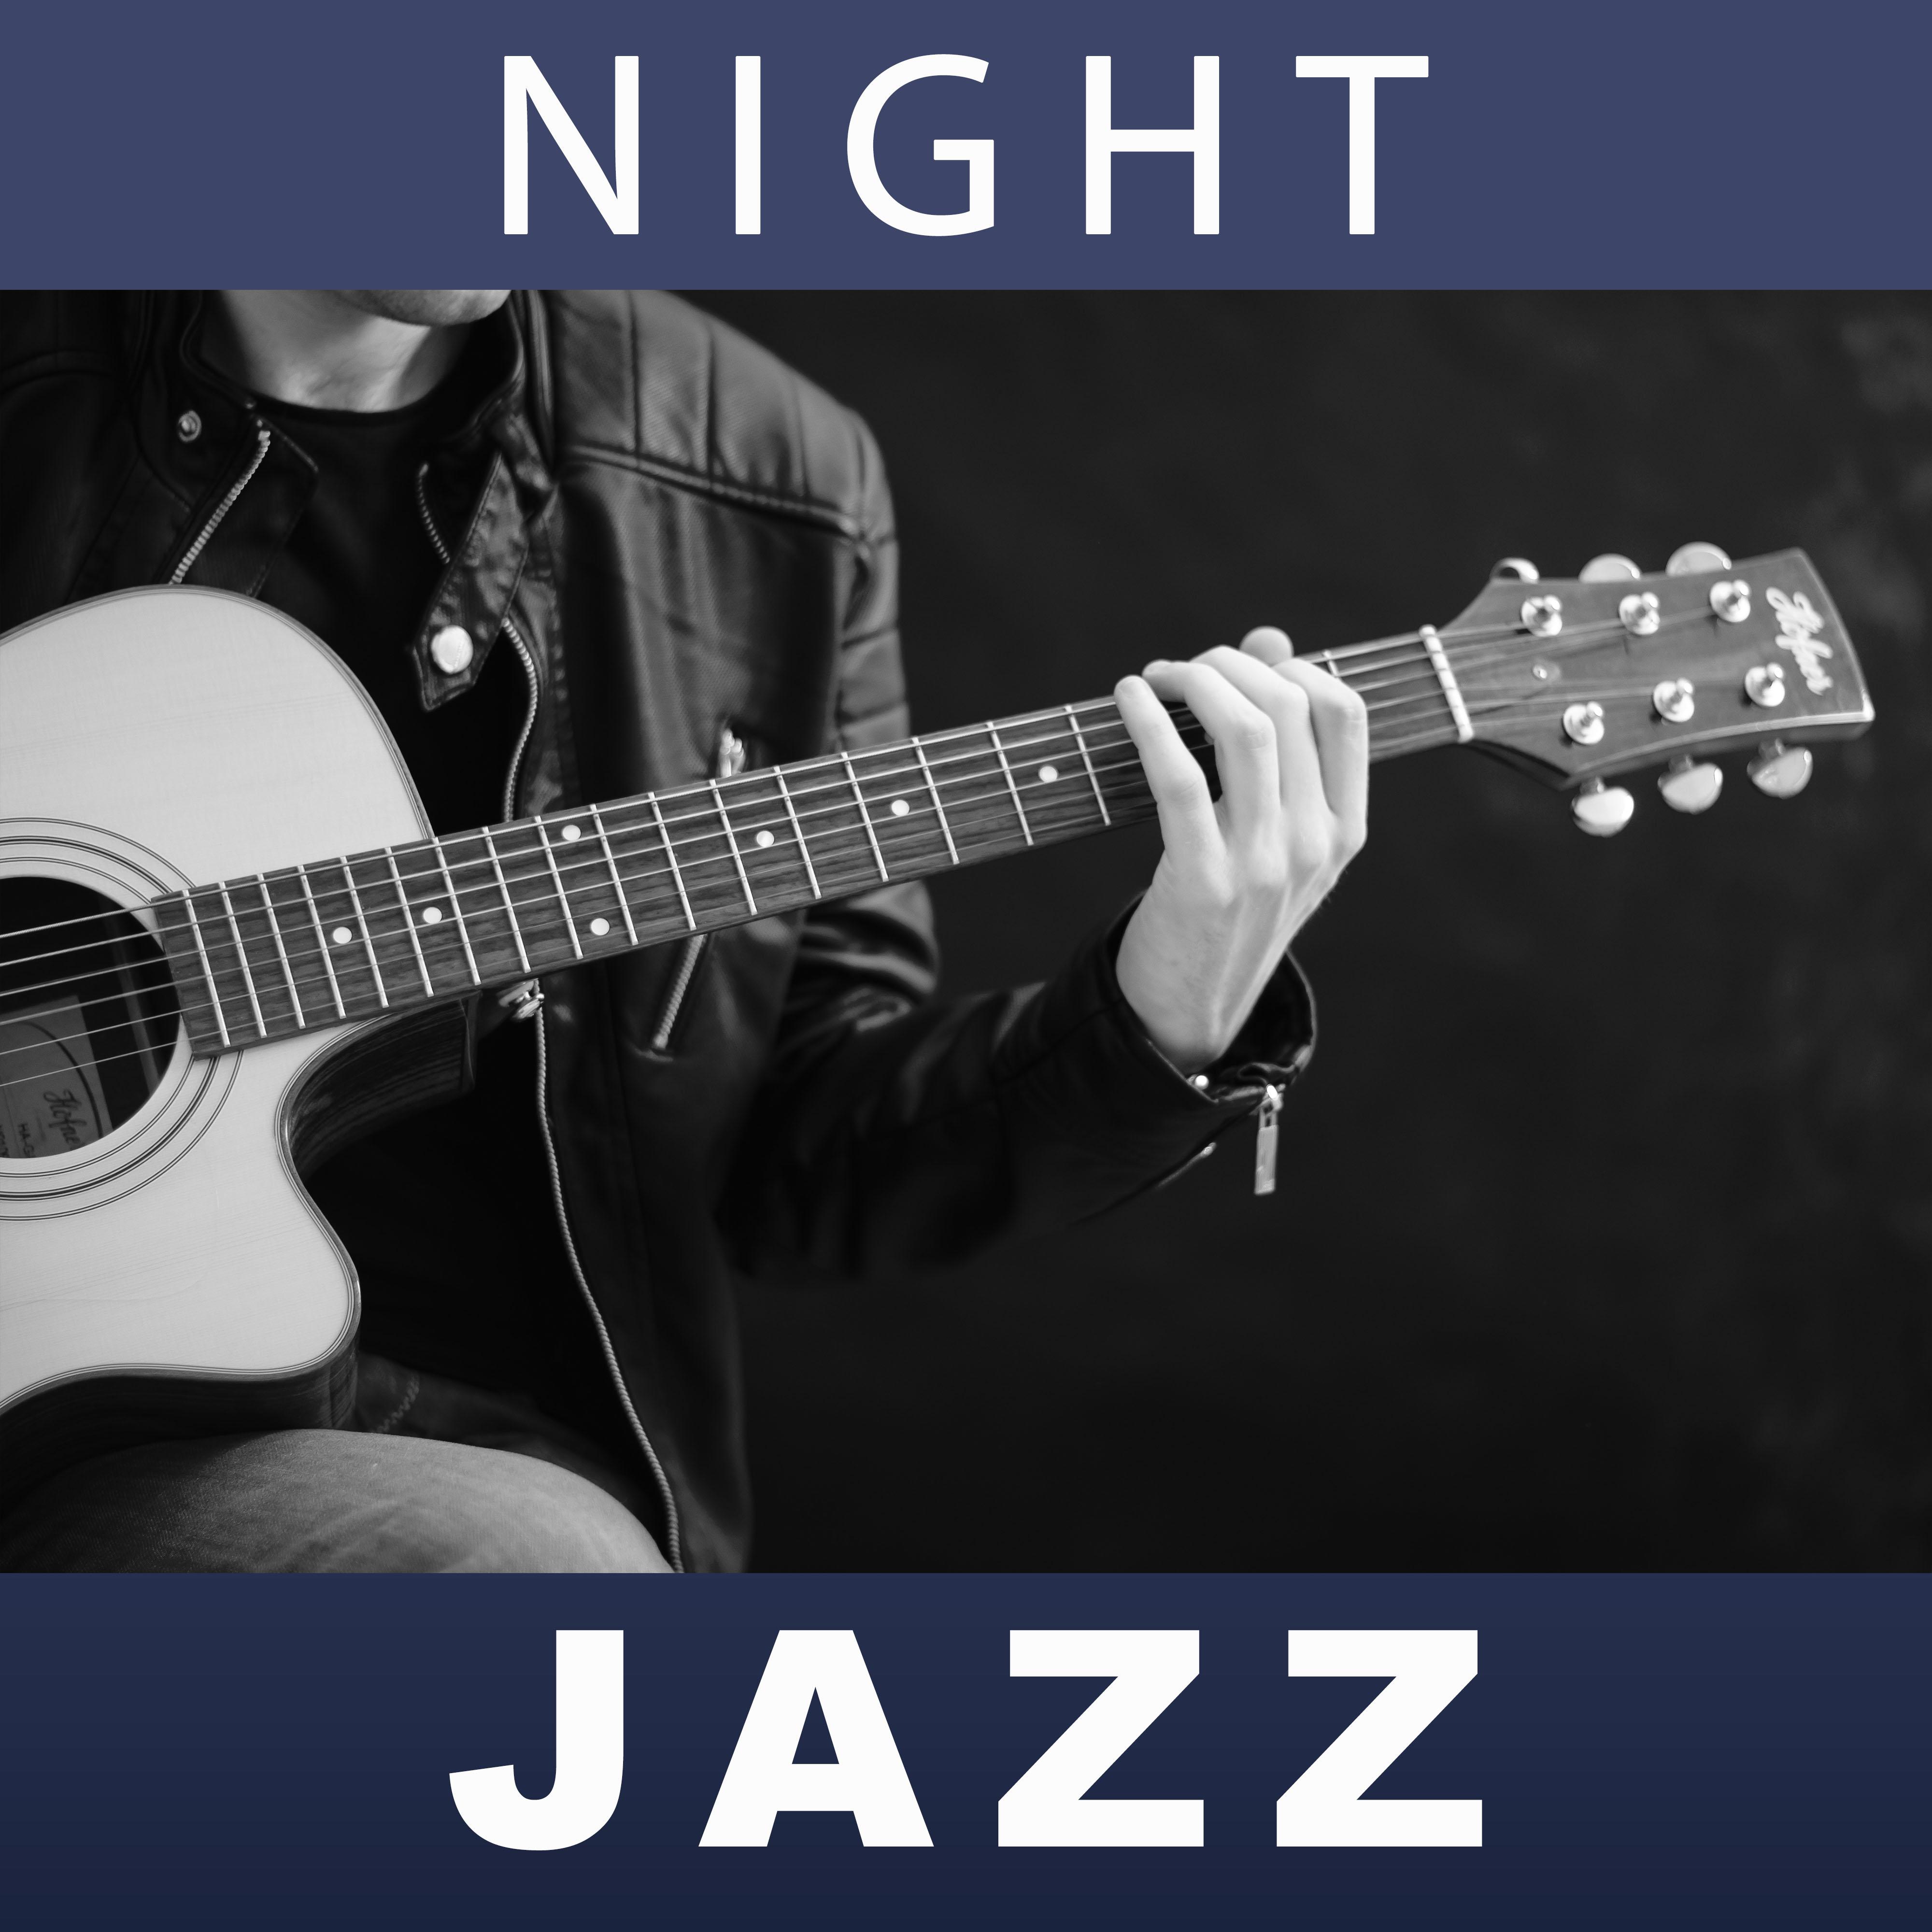 Night Jazz  Best Jazz Sounds, Night Guitar, Bohema Chilled Vibes, Restaurant Music, Background Sounds